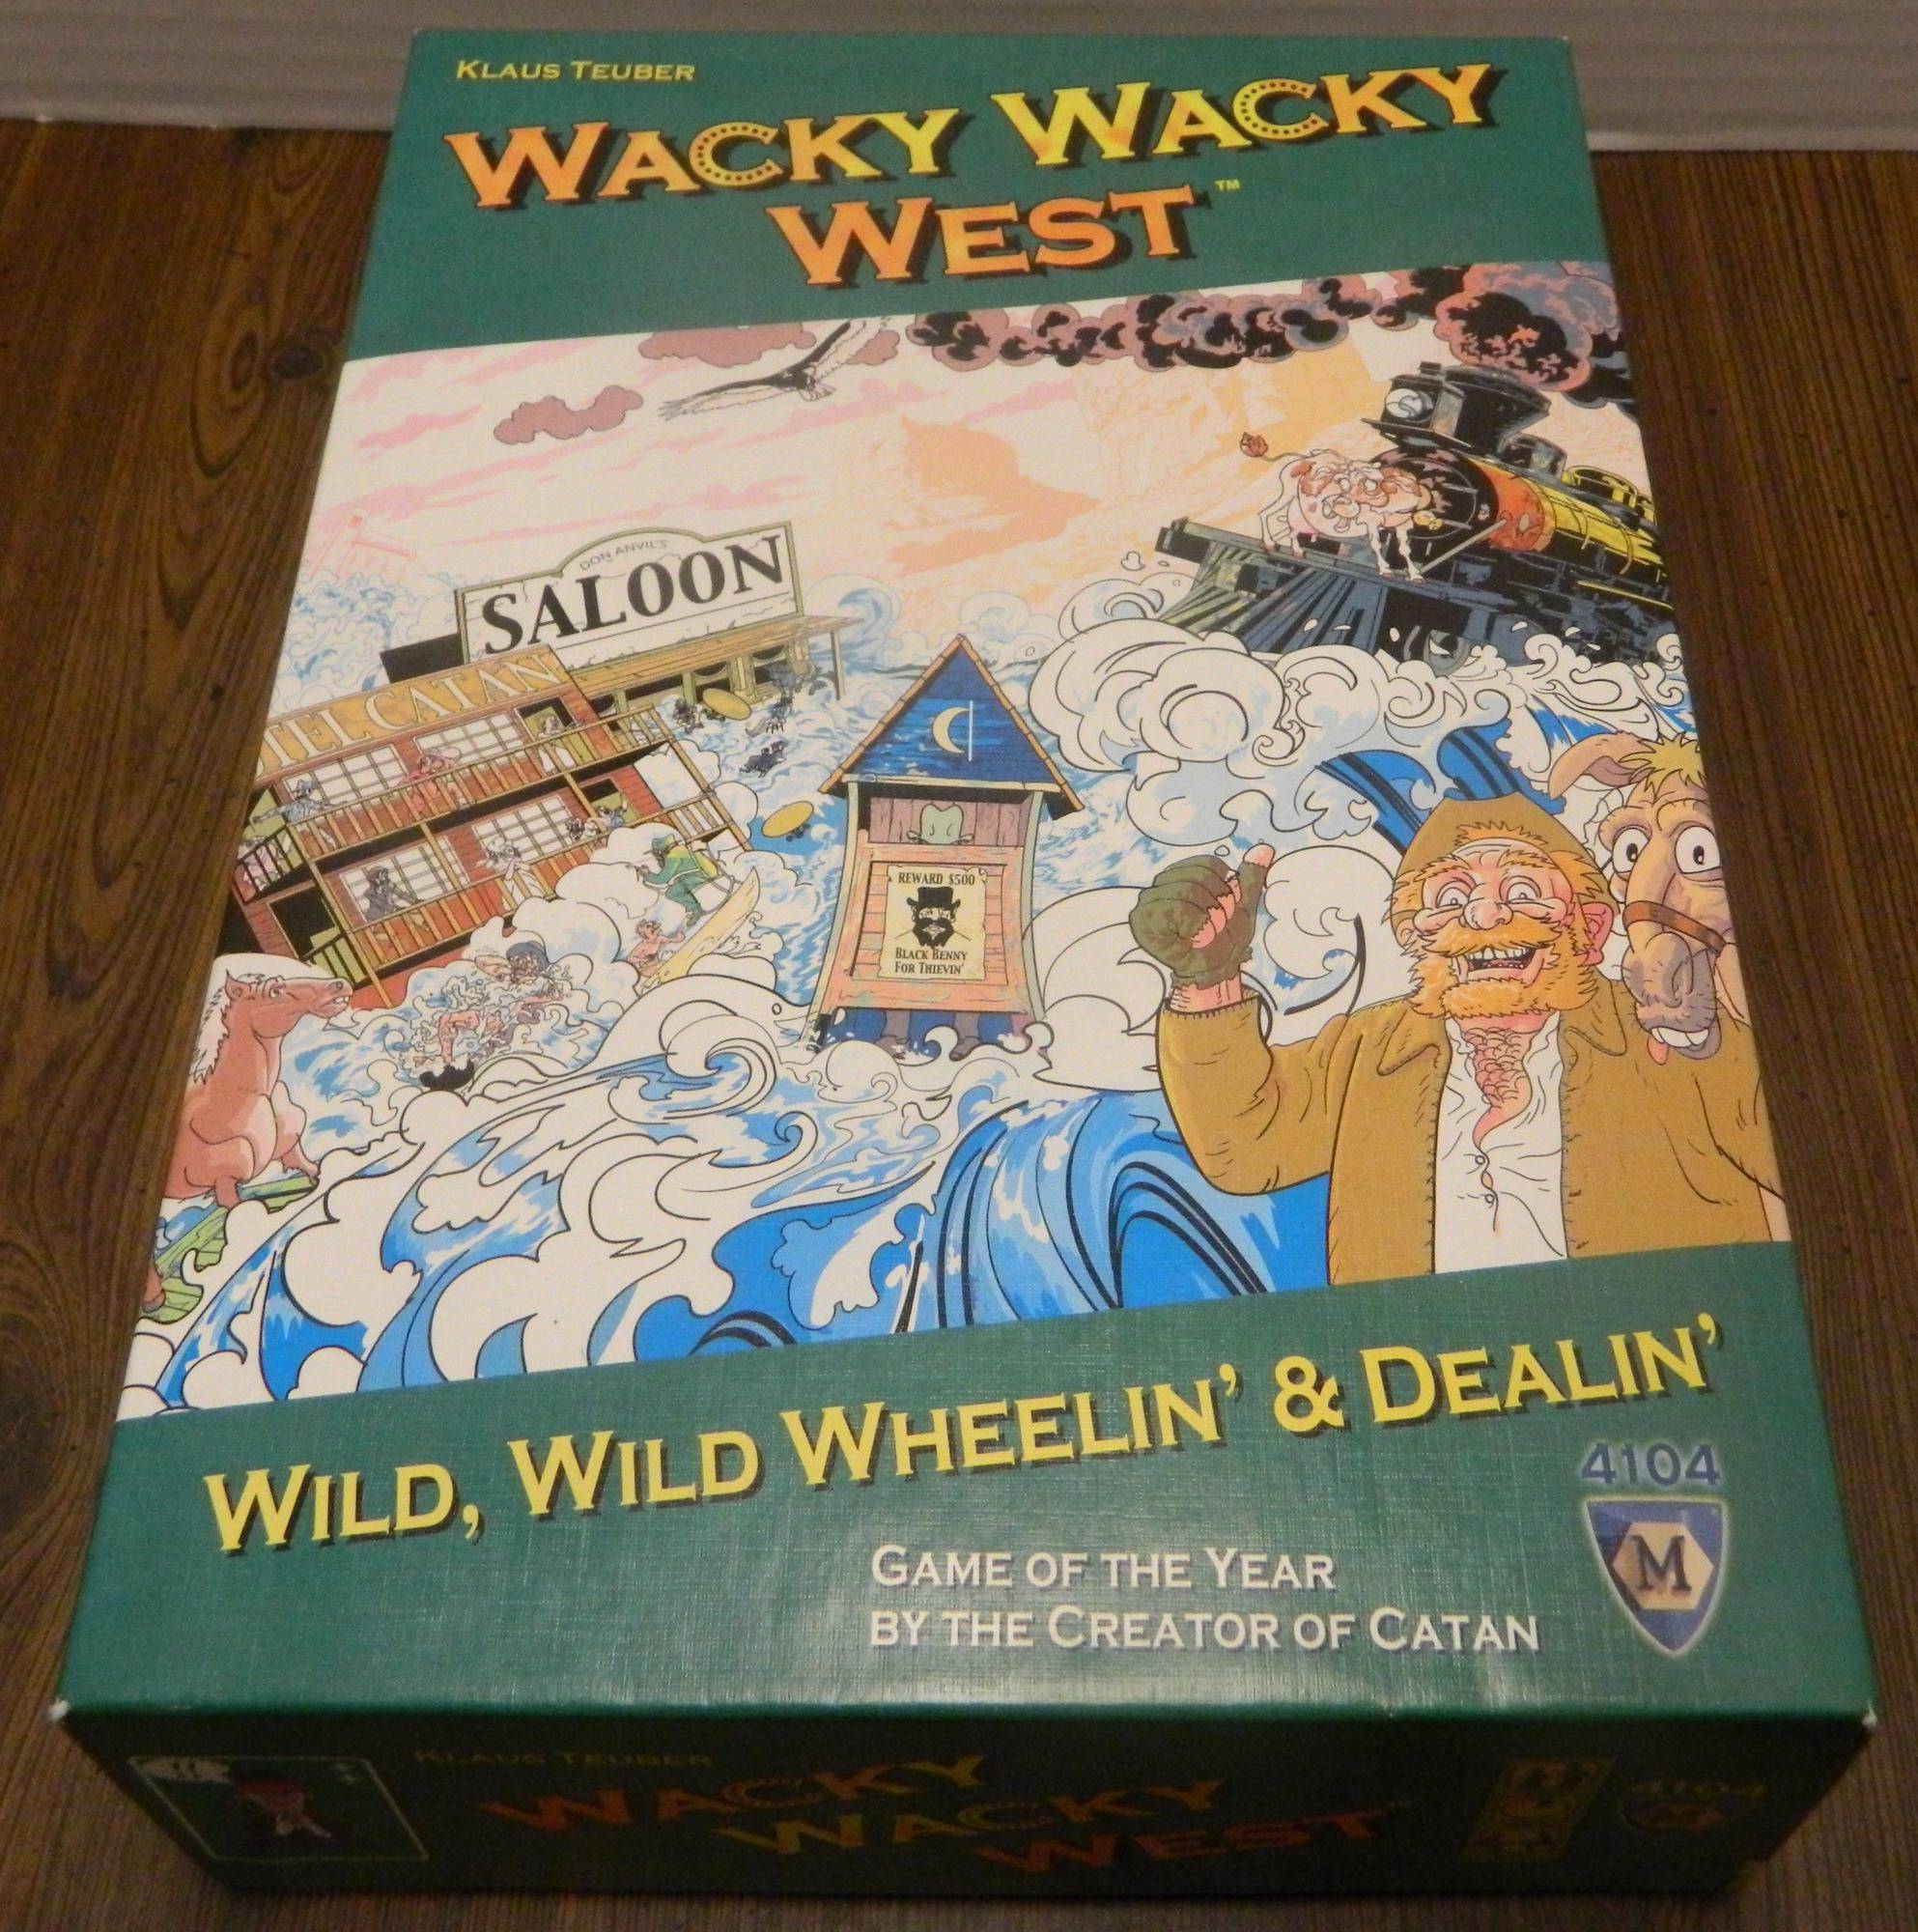 Wacky Wacky West Board Game Review